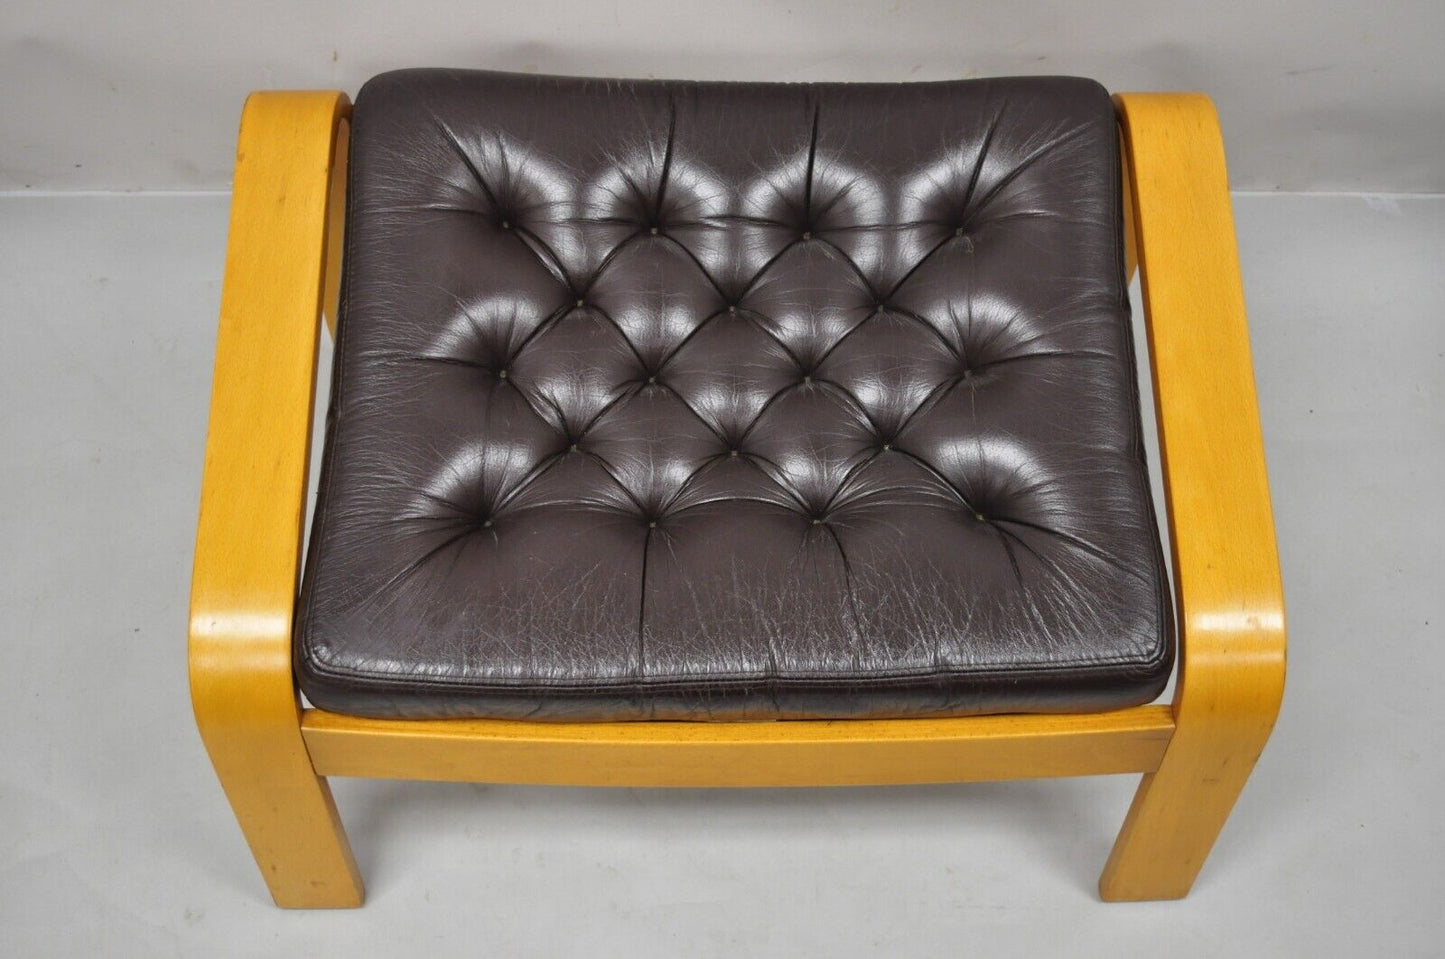 Noboru Nakamura Vintage Poang Bentwood Brown Tufted Leather Ottoman